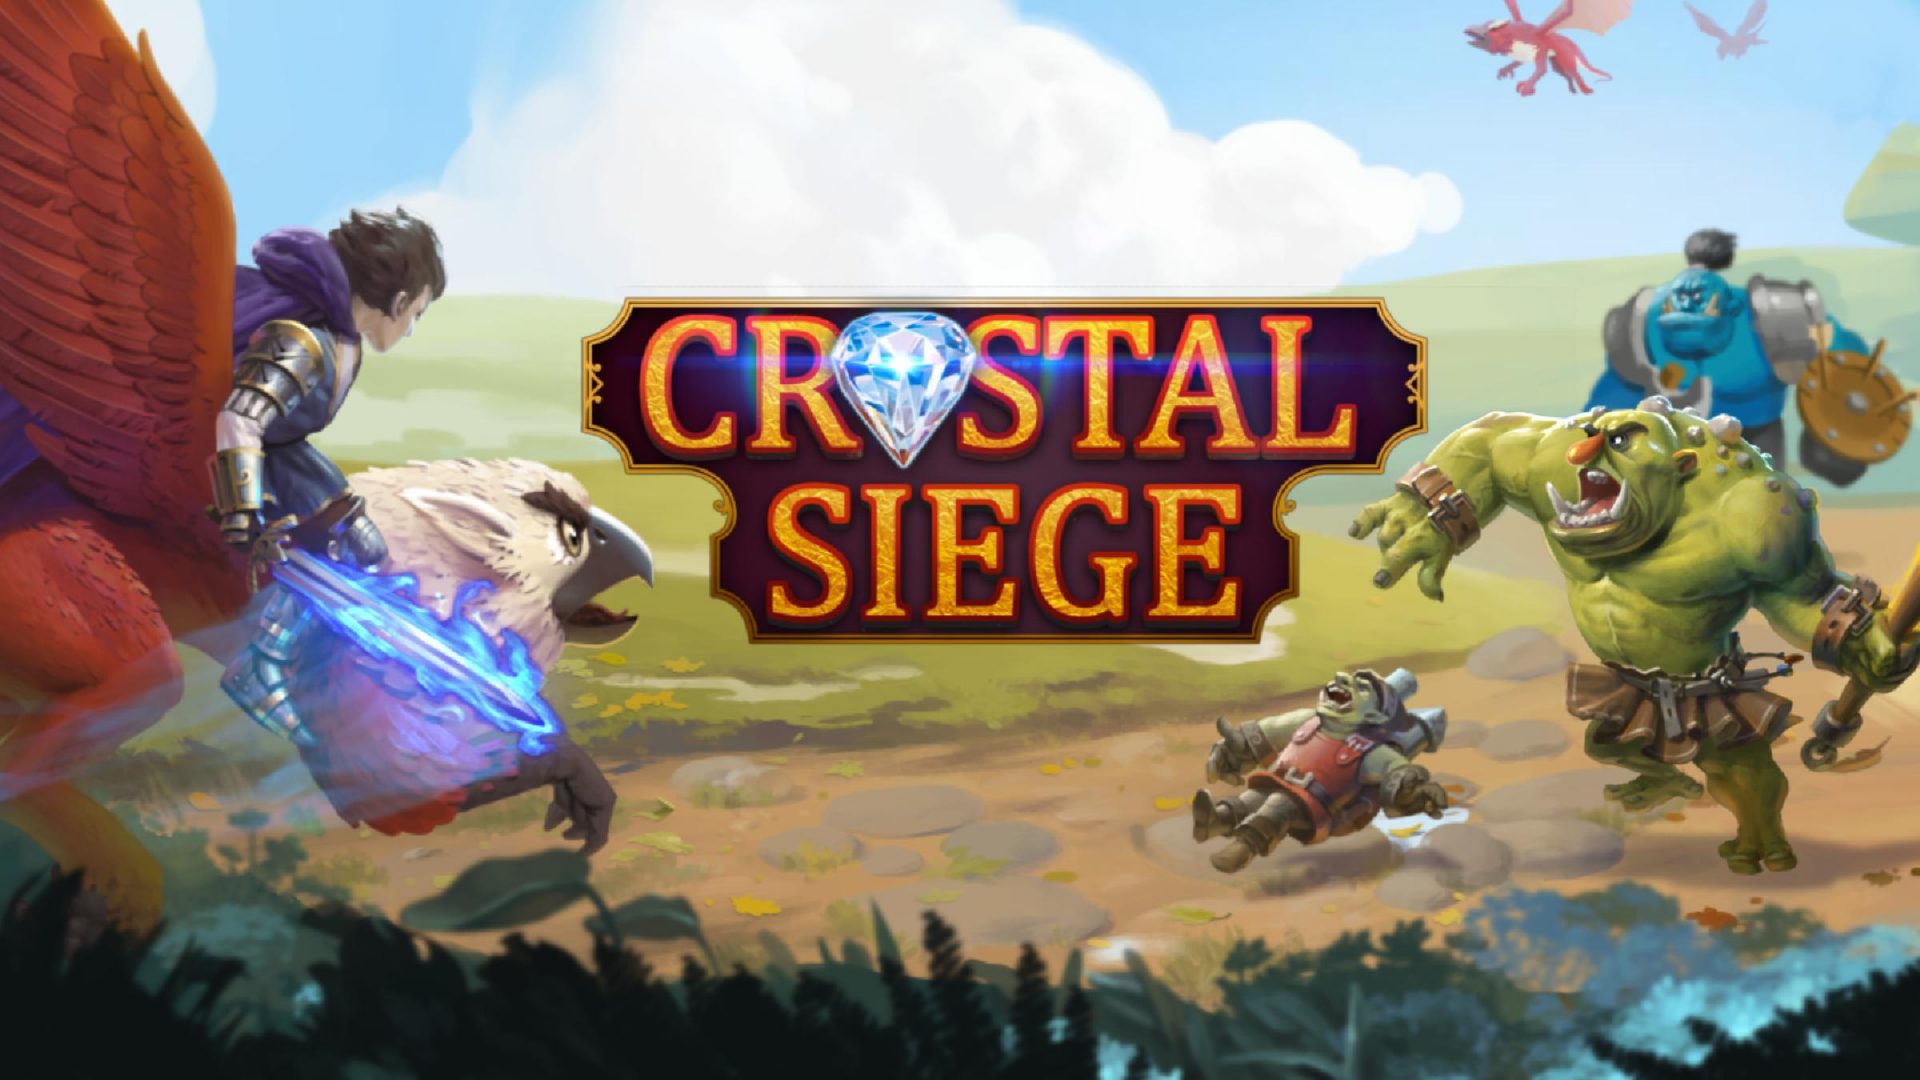 Crystal Siege